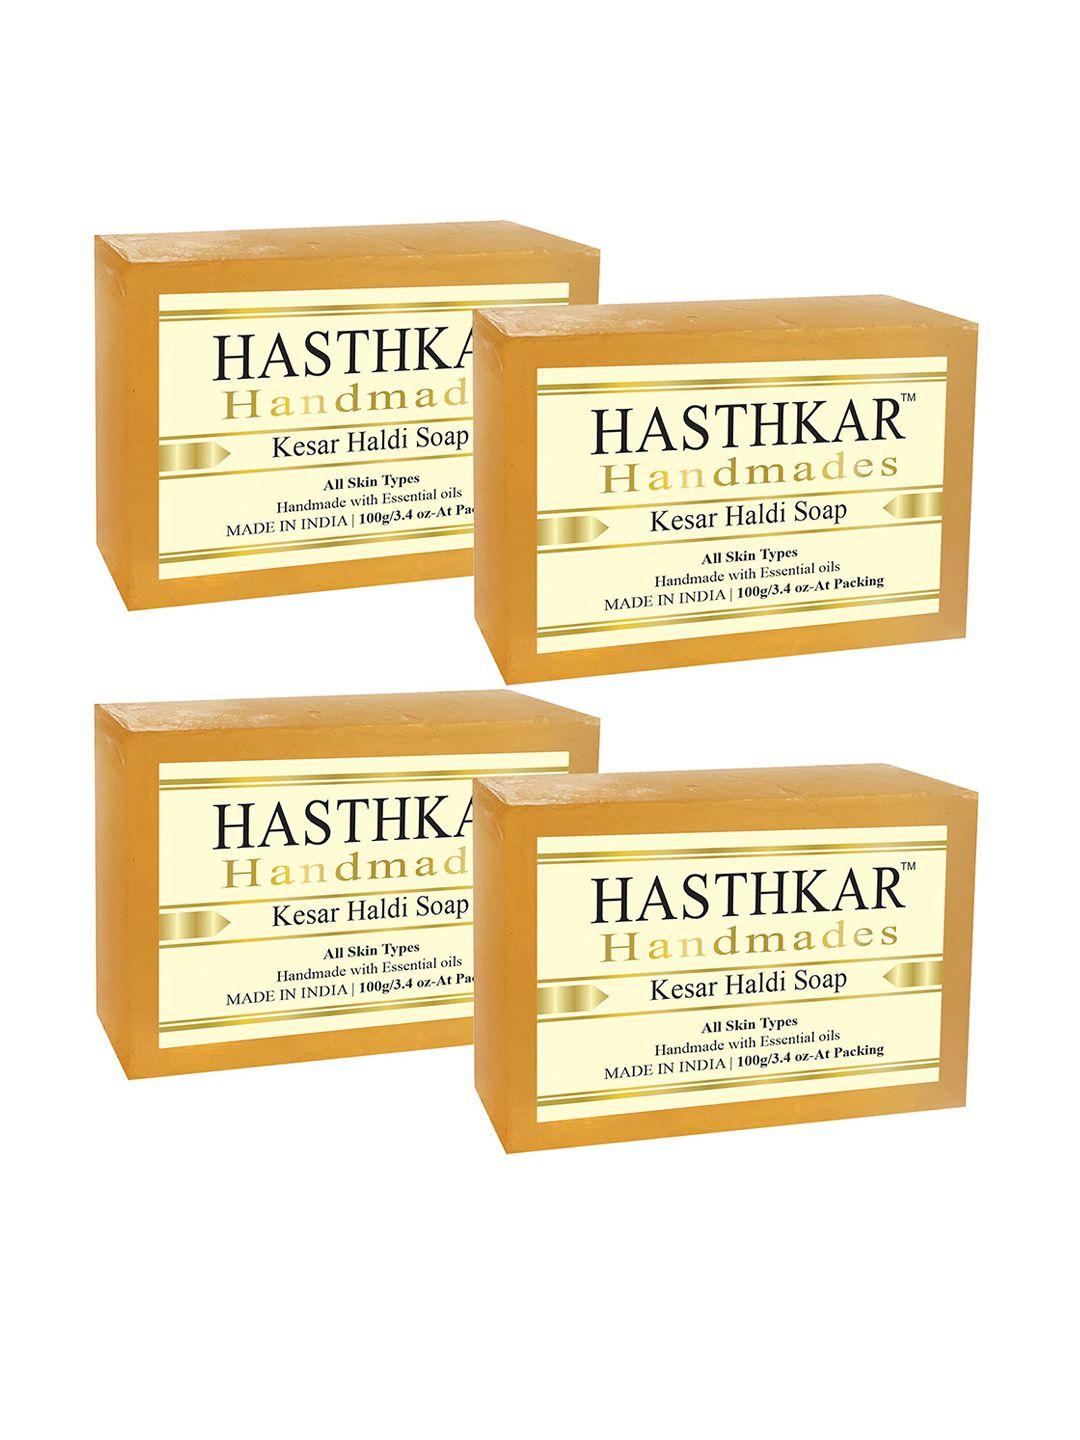 hasthkar handmades set of 4 kesar haldi soaps with coconut oil & glycerin - 100g each